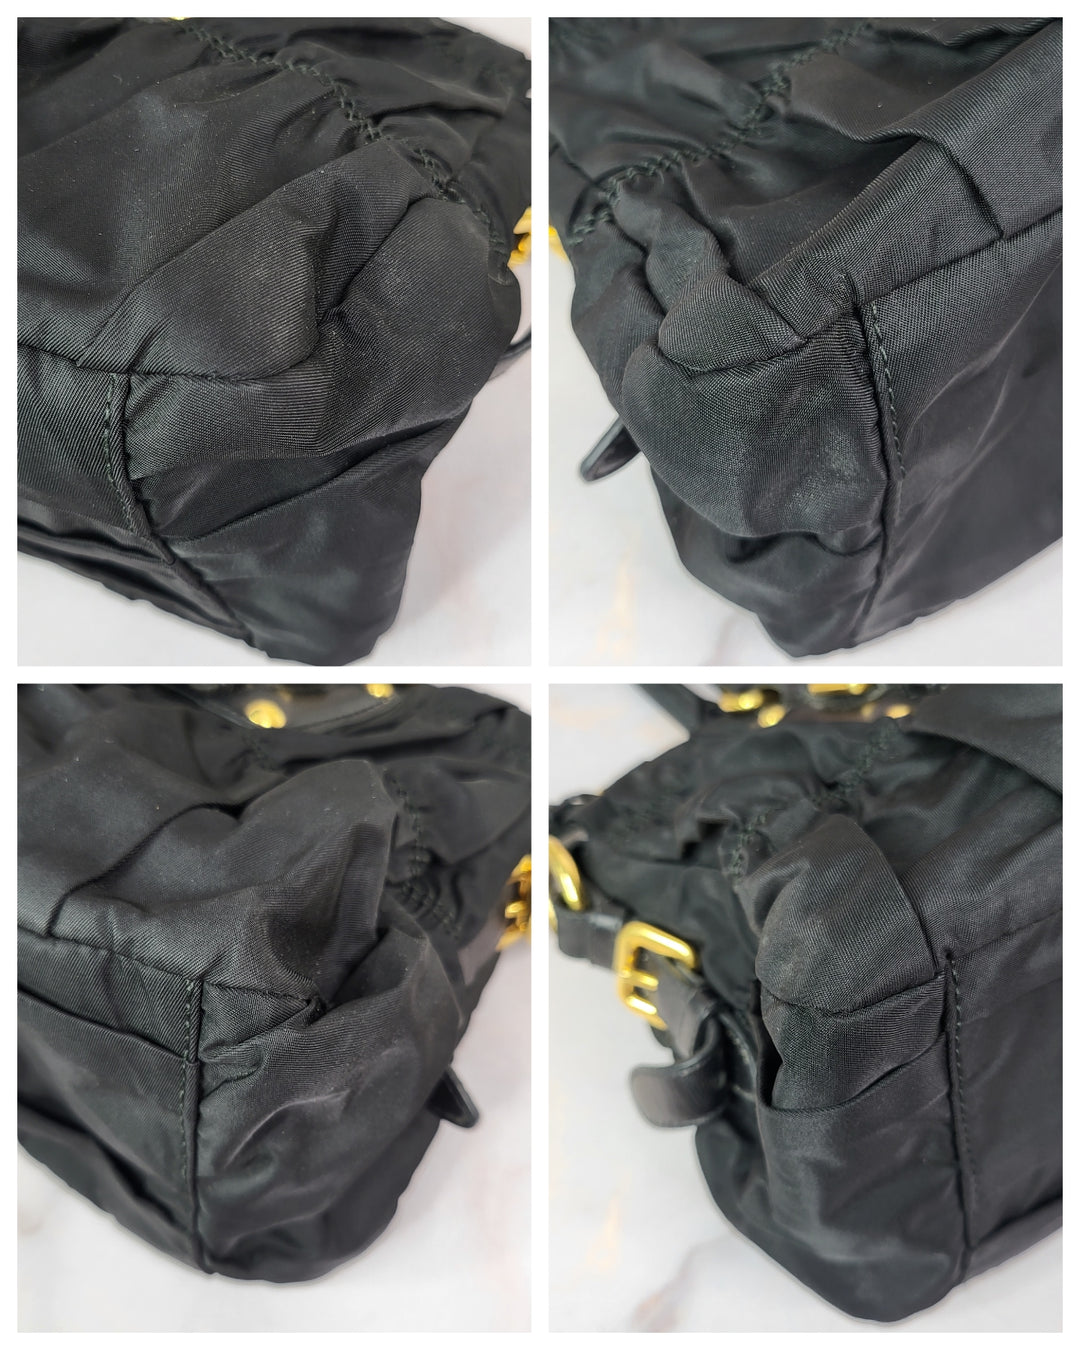 Prada Tessuto Gauffre Tote Bag